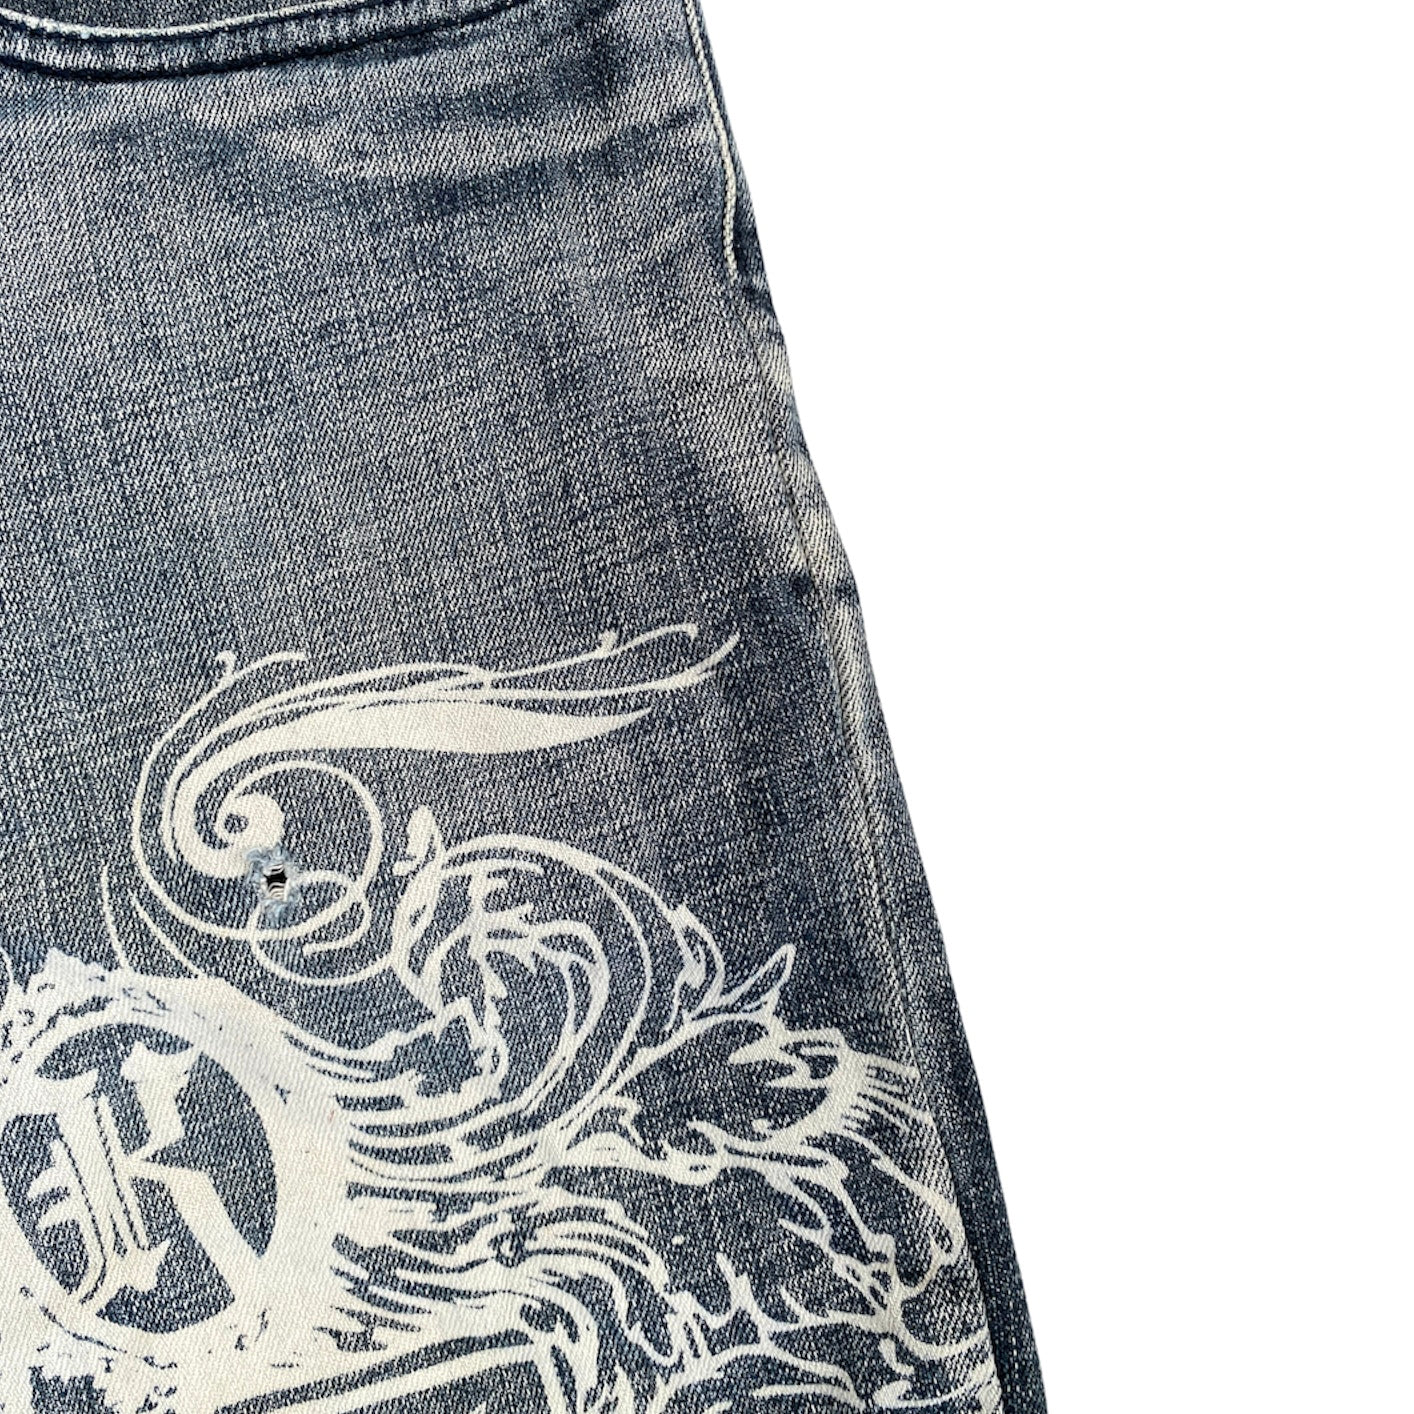 Karl Kani Baggy Jeans with Print